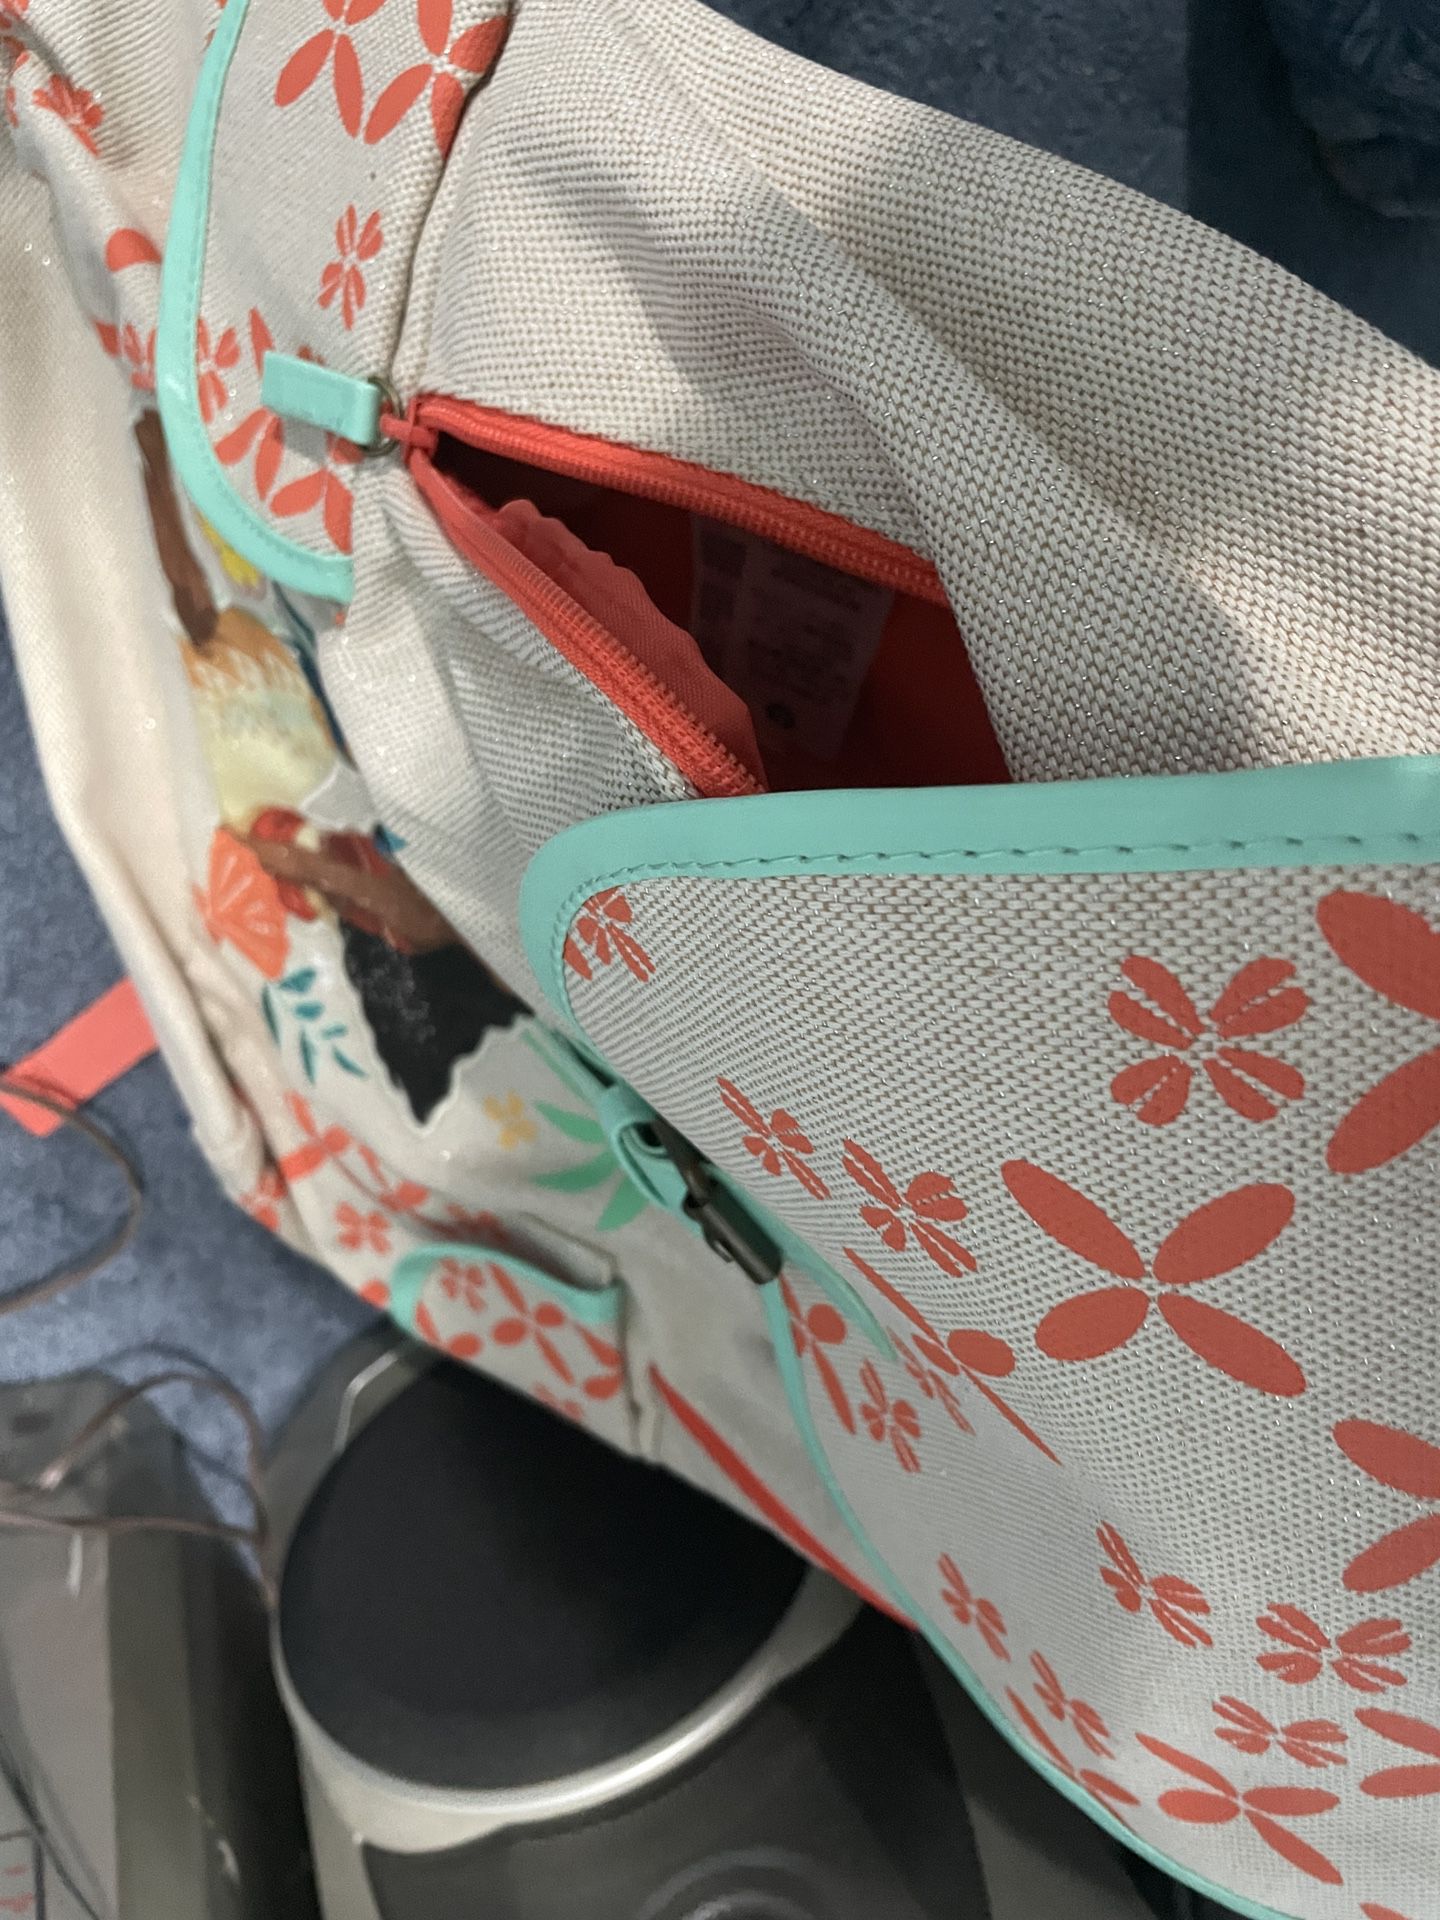 New Authentic Disney Moana Backpack